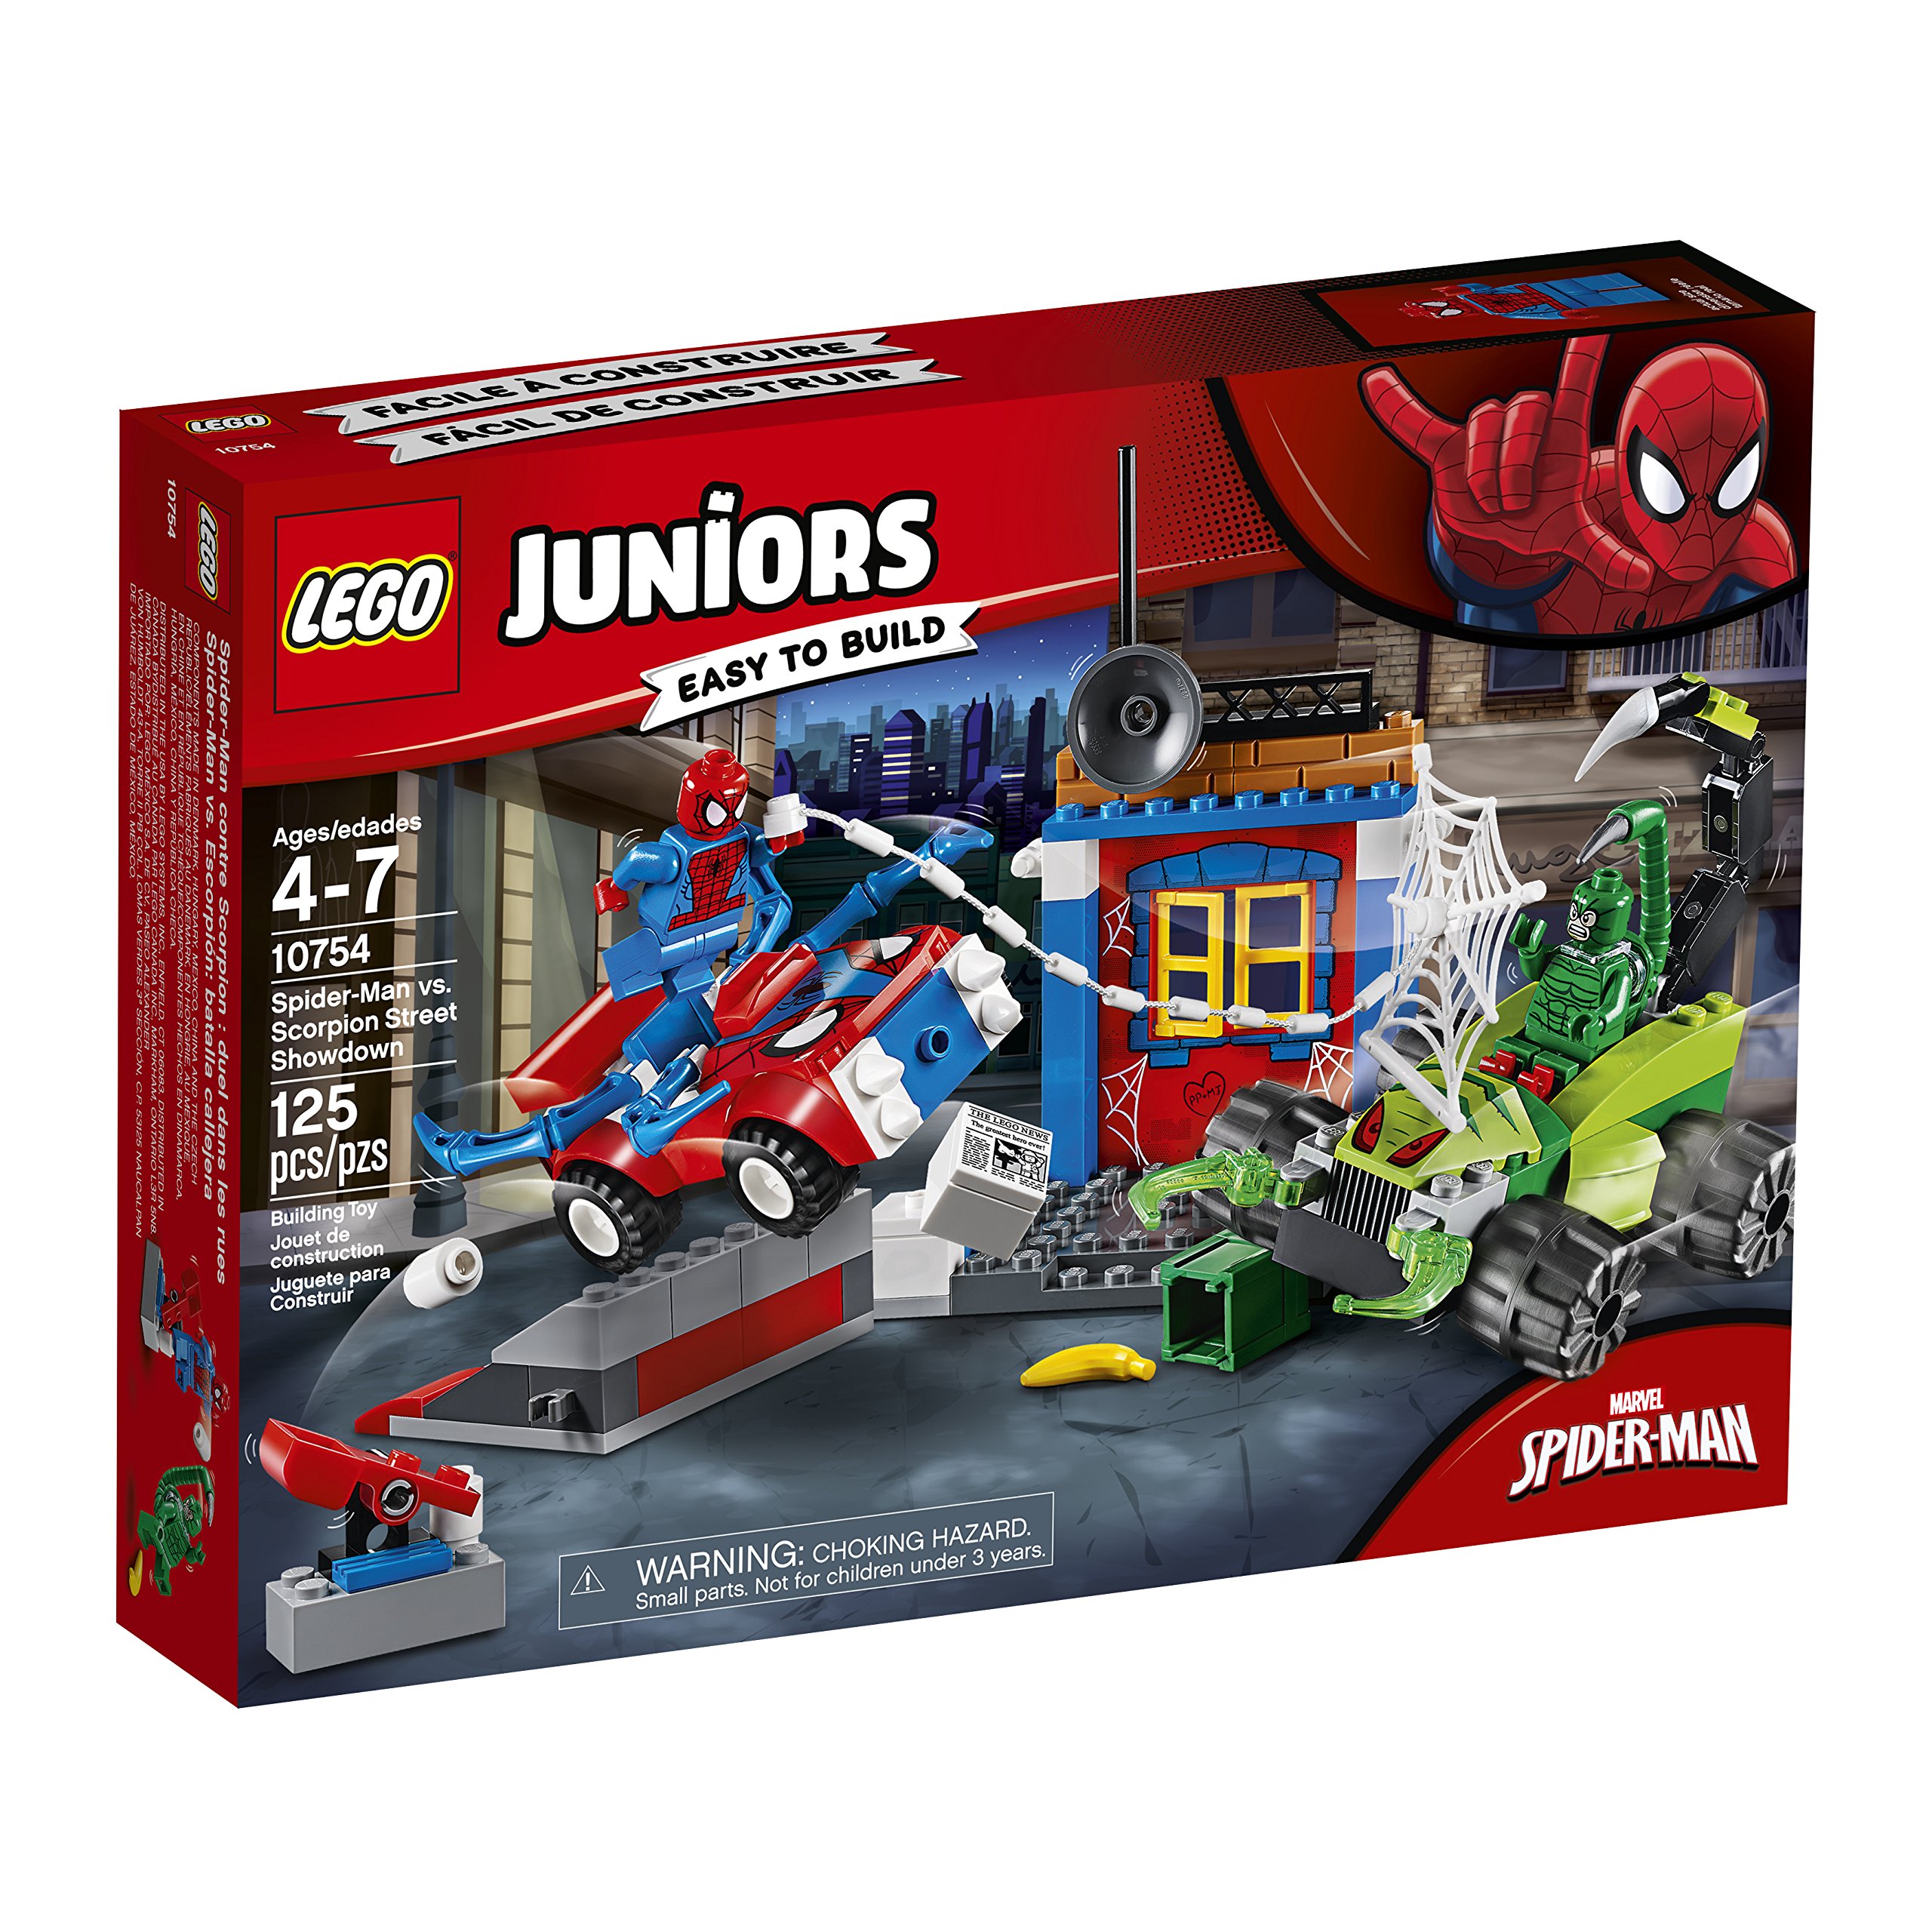 Mua LEGO Juniors/4+ Marvel Super Heroes Spider-Man vs. Scorpion Street  Showdown 10754 Building Kit (125 Pieces) trên Amazon Mỹ chính hãng 2023 |  Giaonhan247